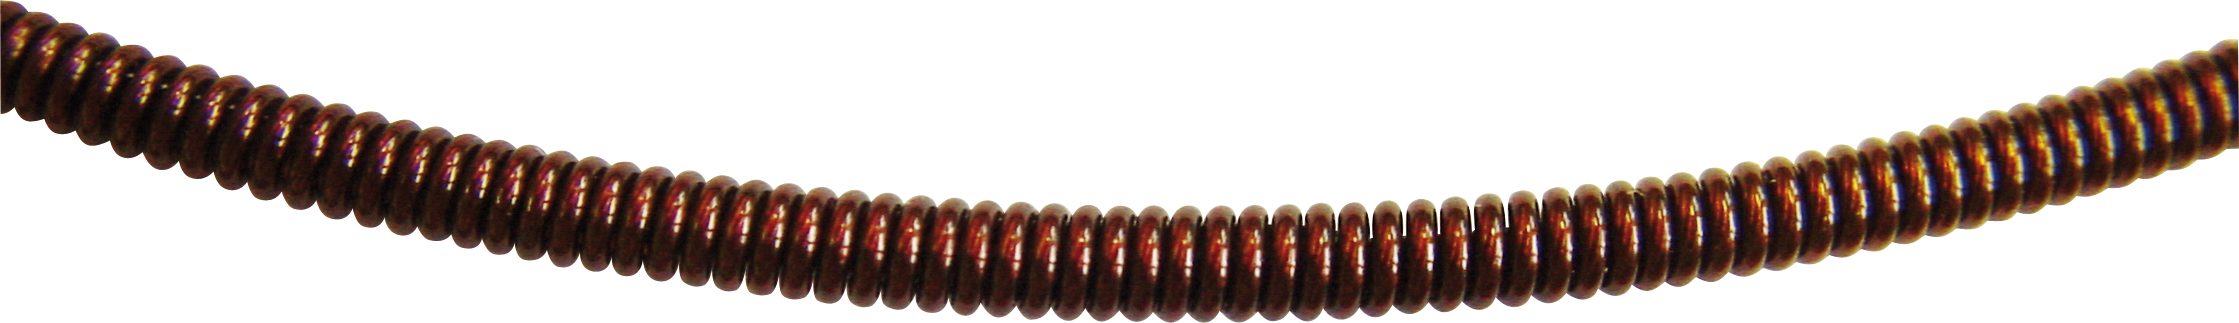 spiraalketting van ommanteld staal met kunststof kern bruin met bajonetsluiting (edelstaal), Ø 2,80mm  lengte 42,00cm